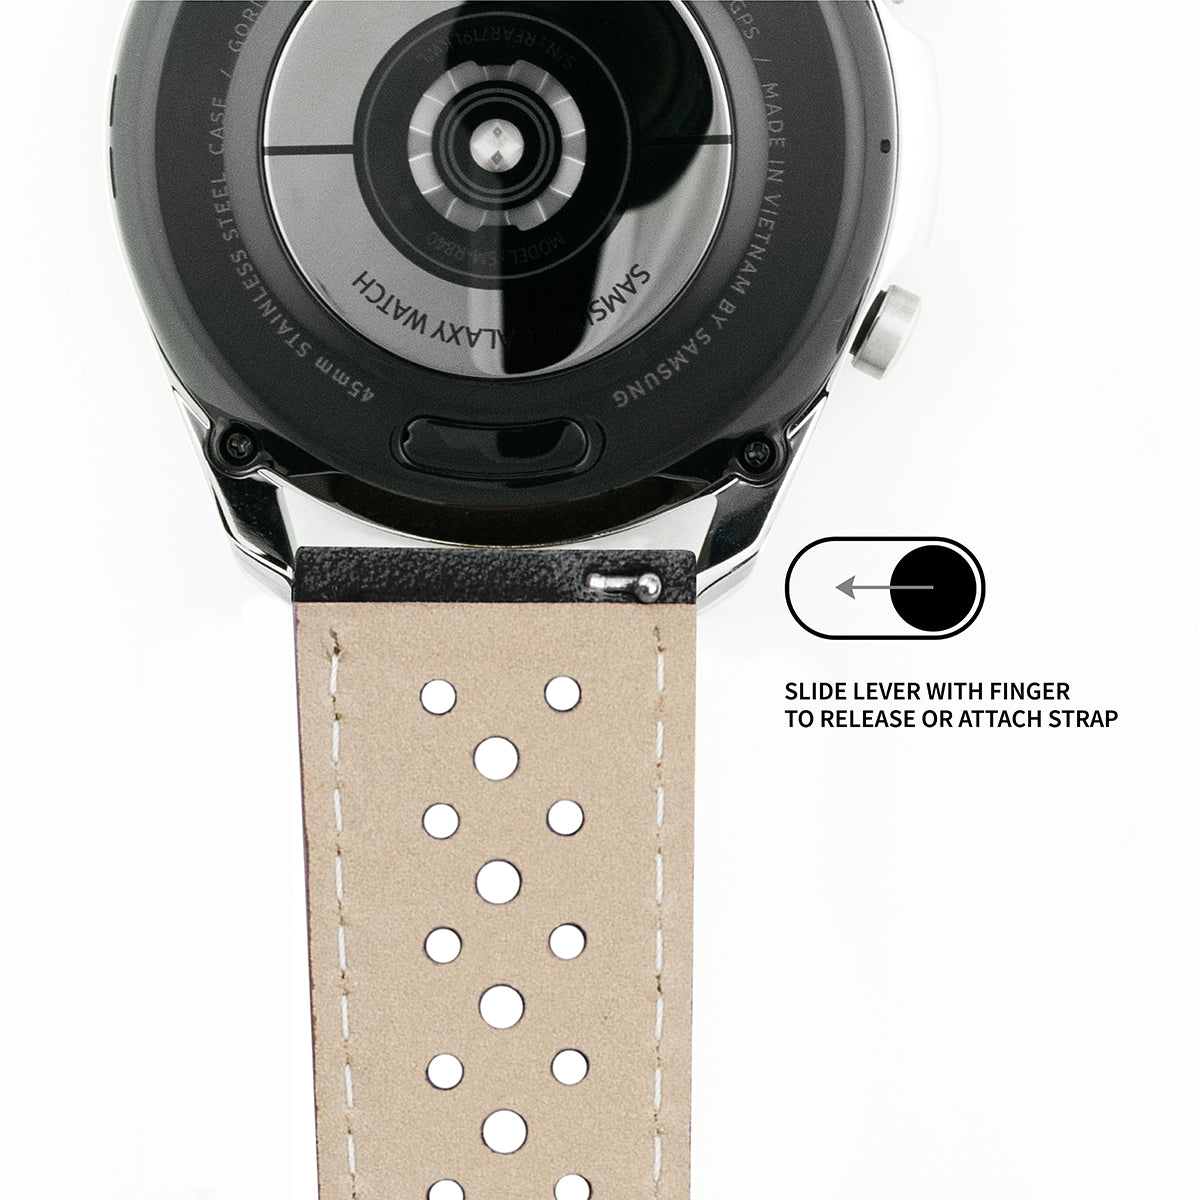 Samsung Galaxy Watch4 Racing Horween Leather Black Linen Stitch Watch Band